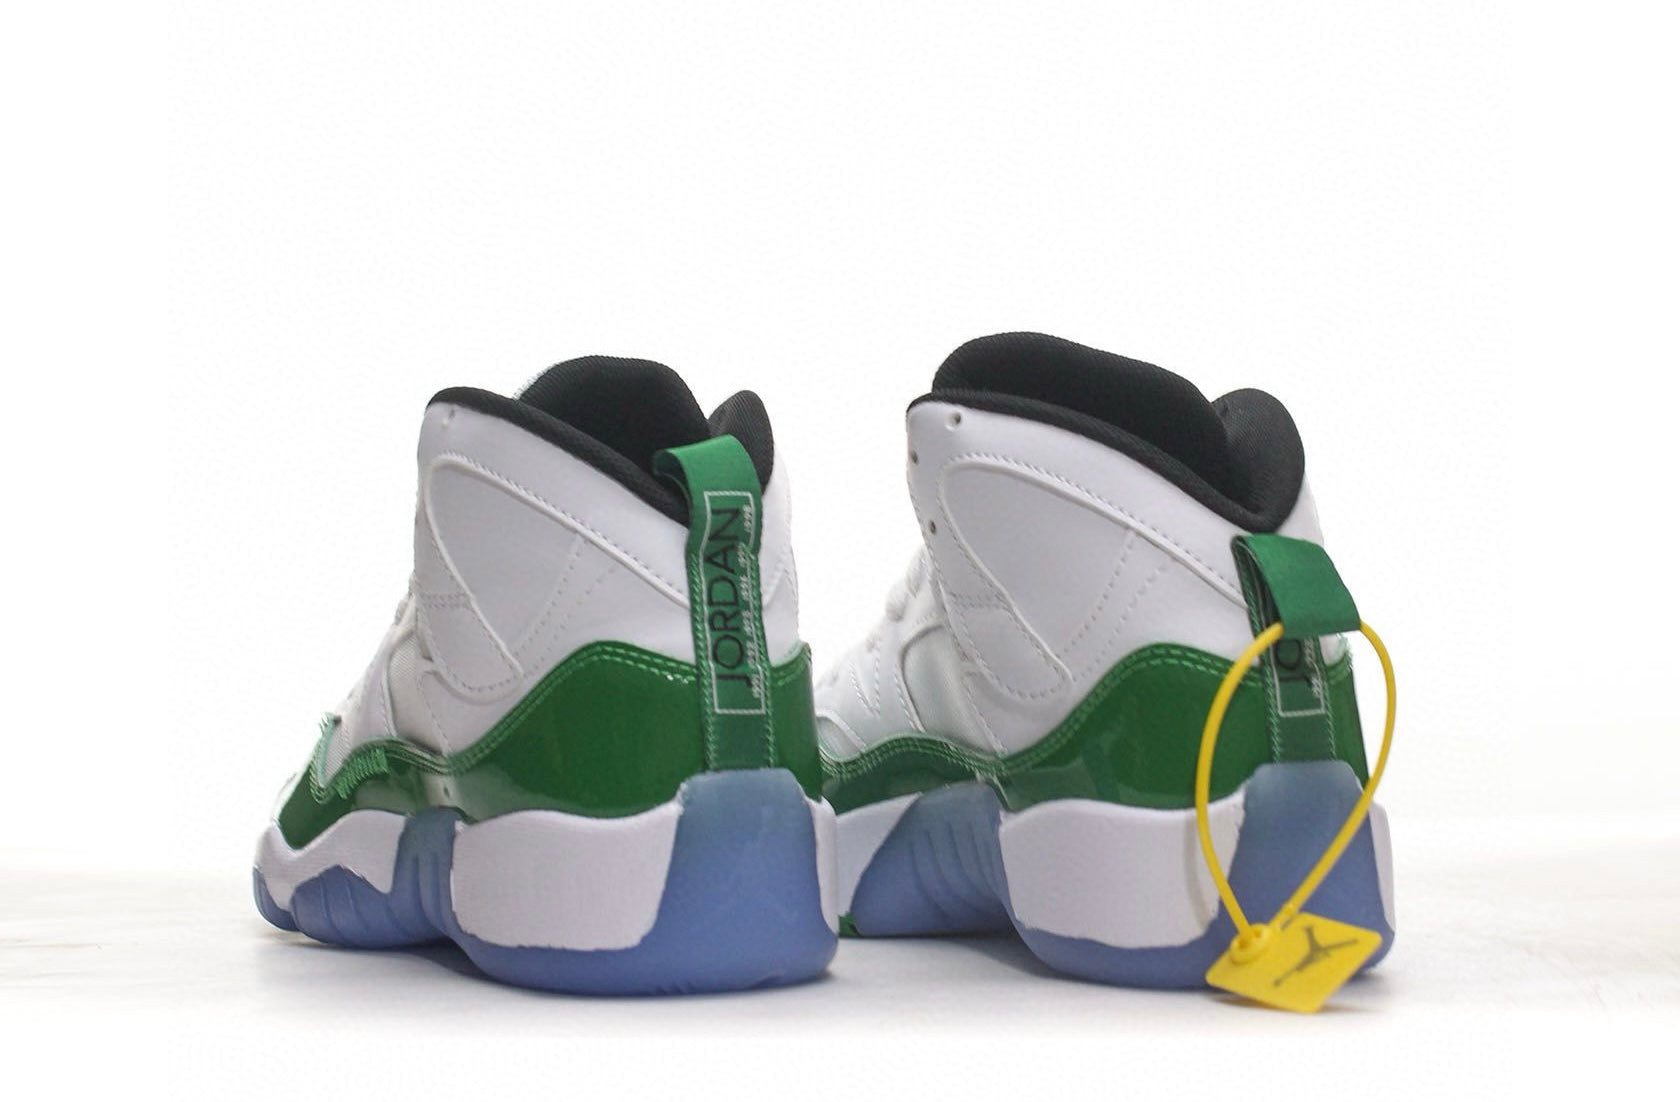 Nike air jordan retro green shoes